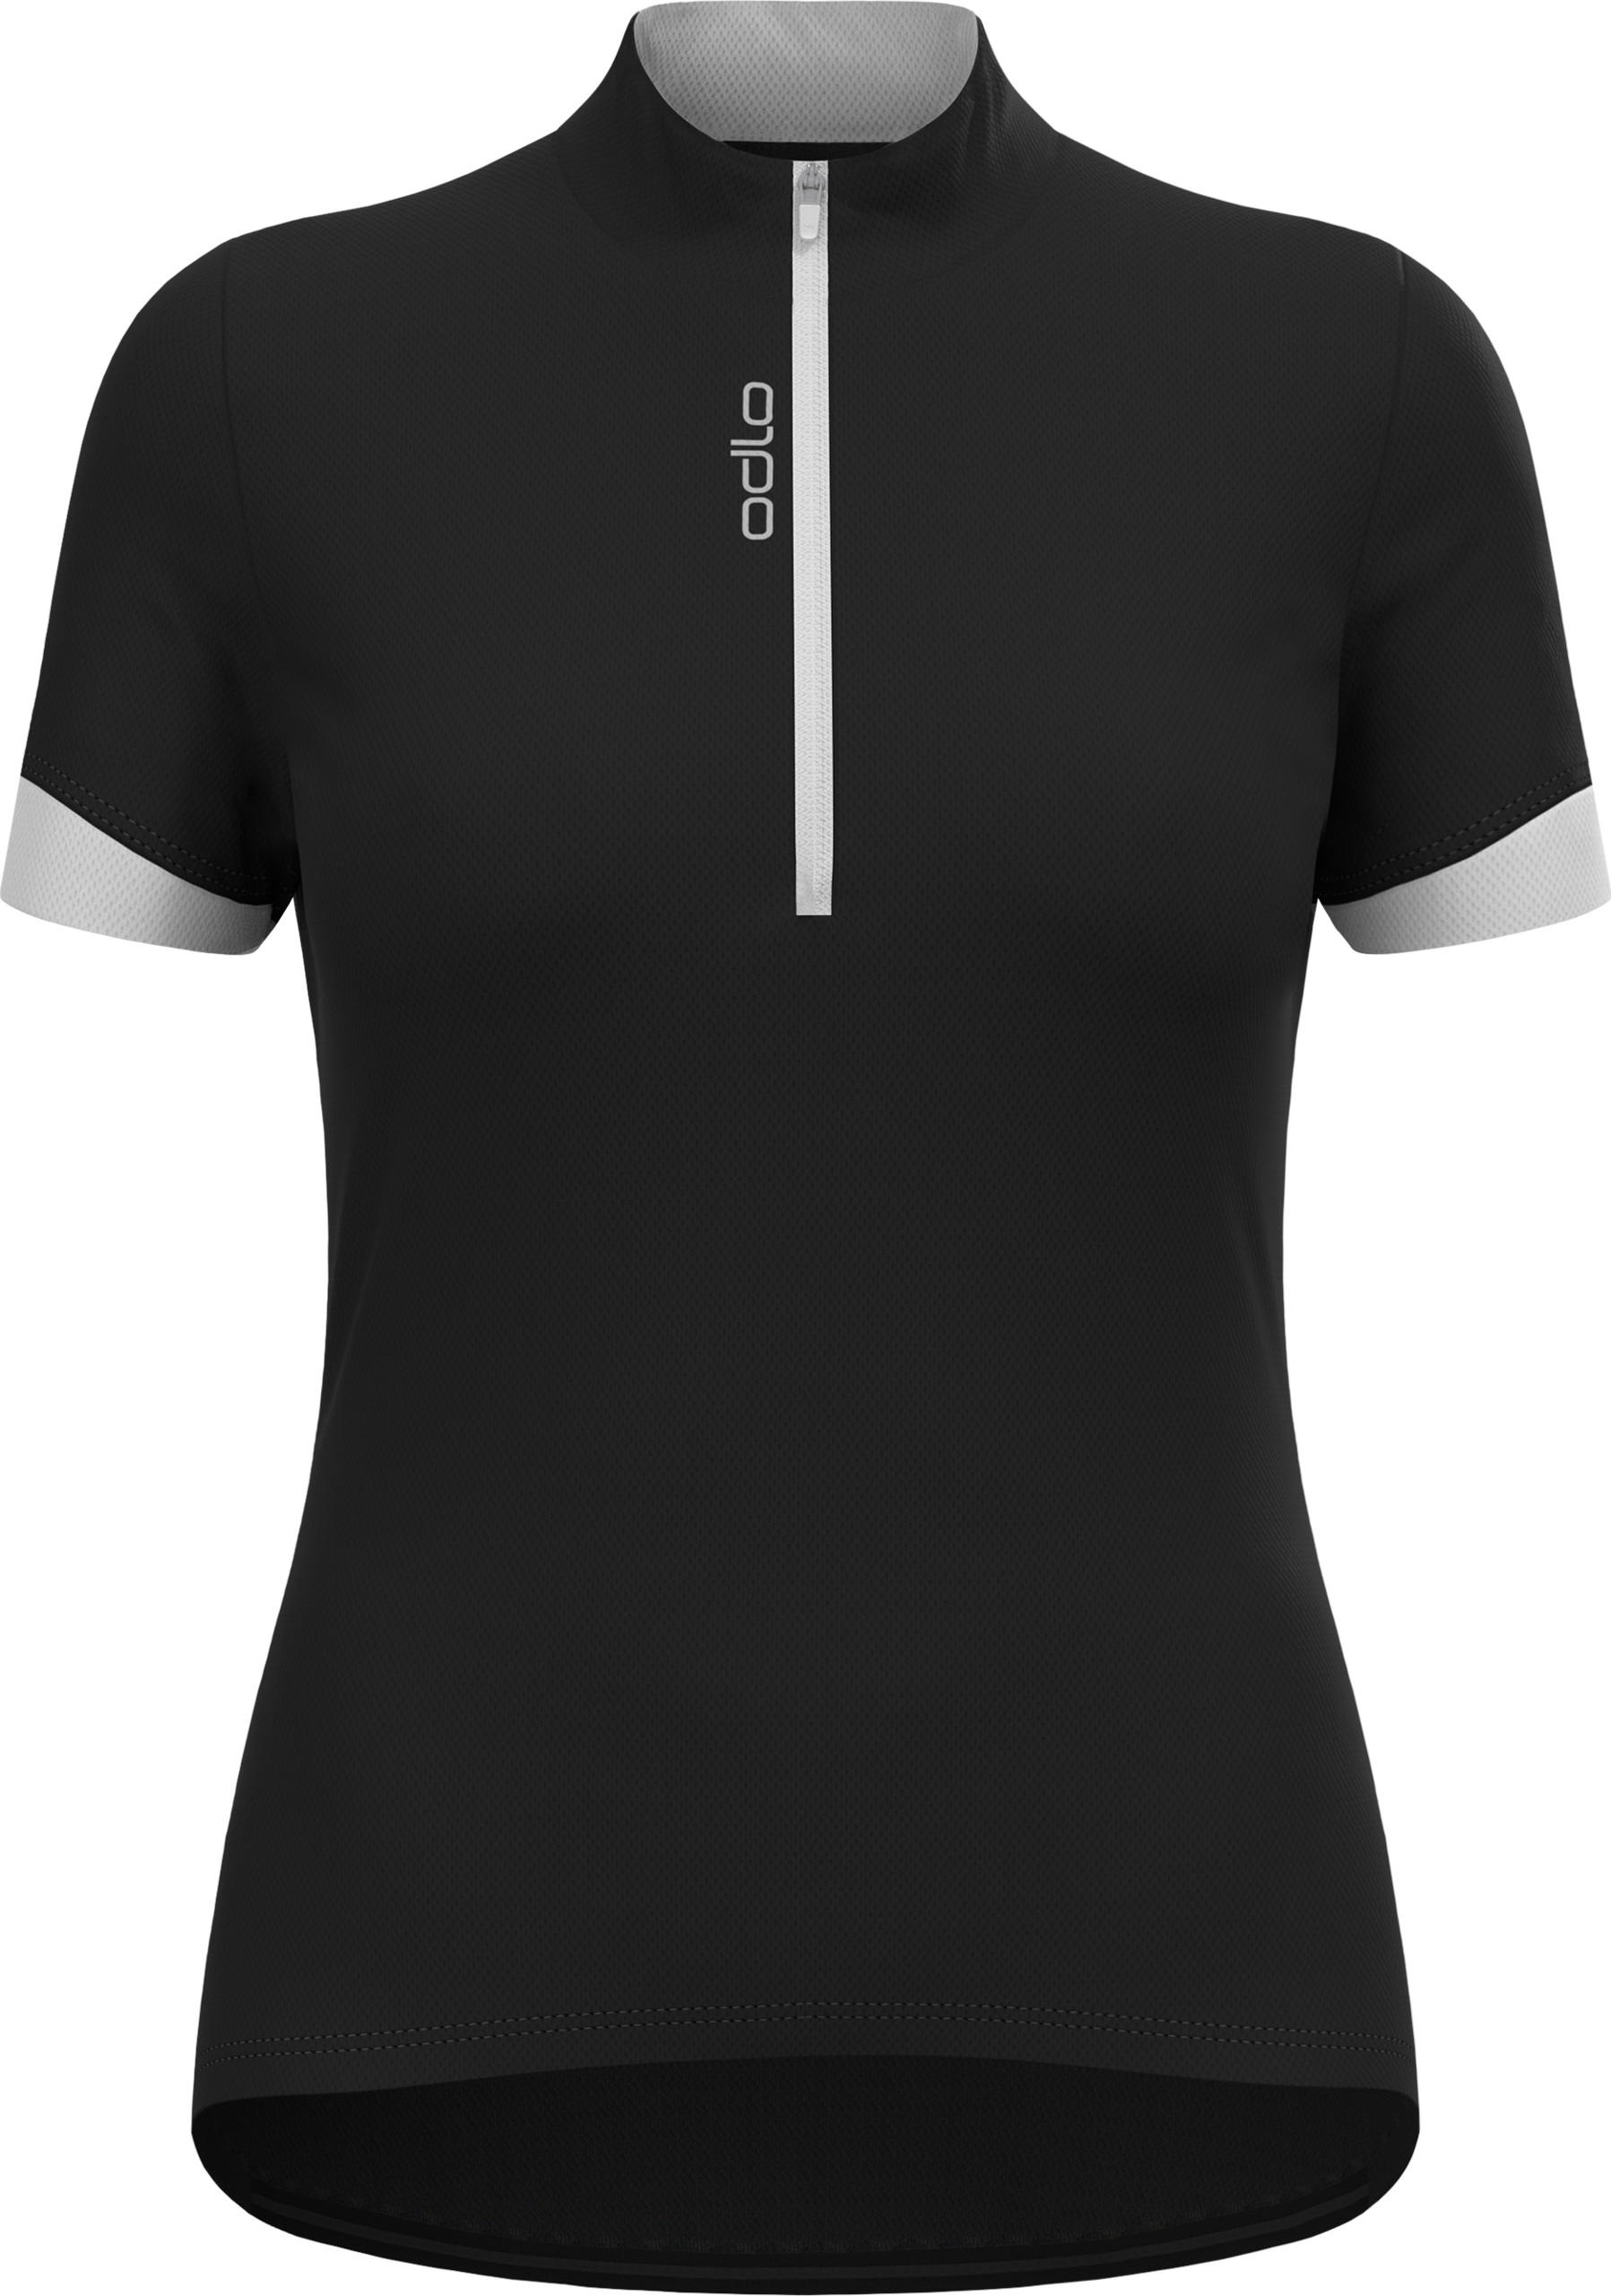 Odlo Women’s T-shirt S/U Collar S/S 1/2 Zip Essential Black/White